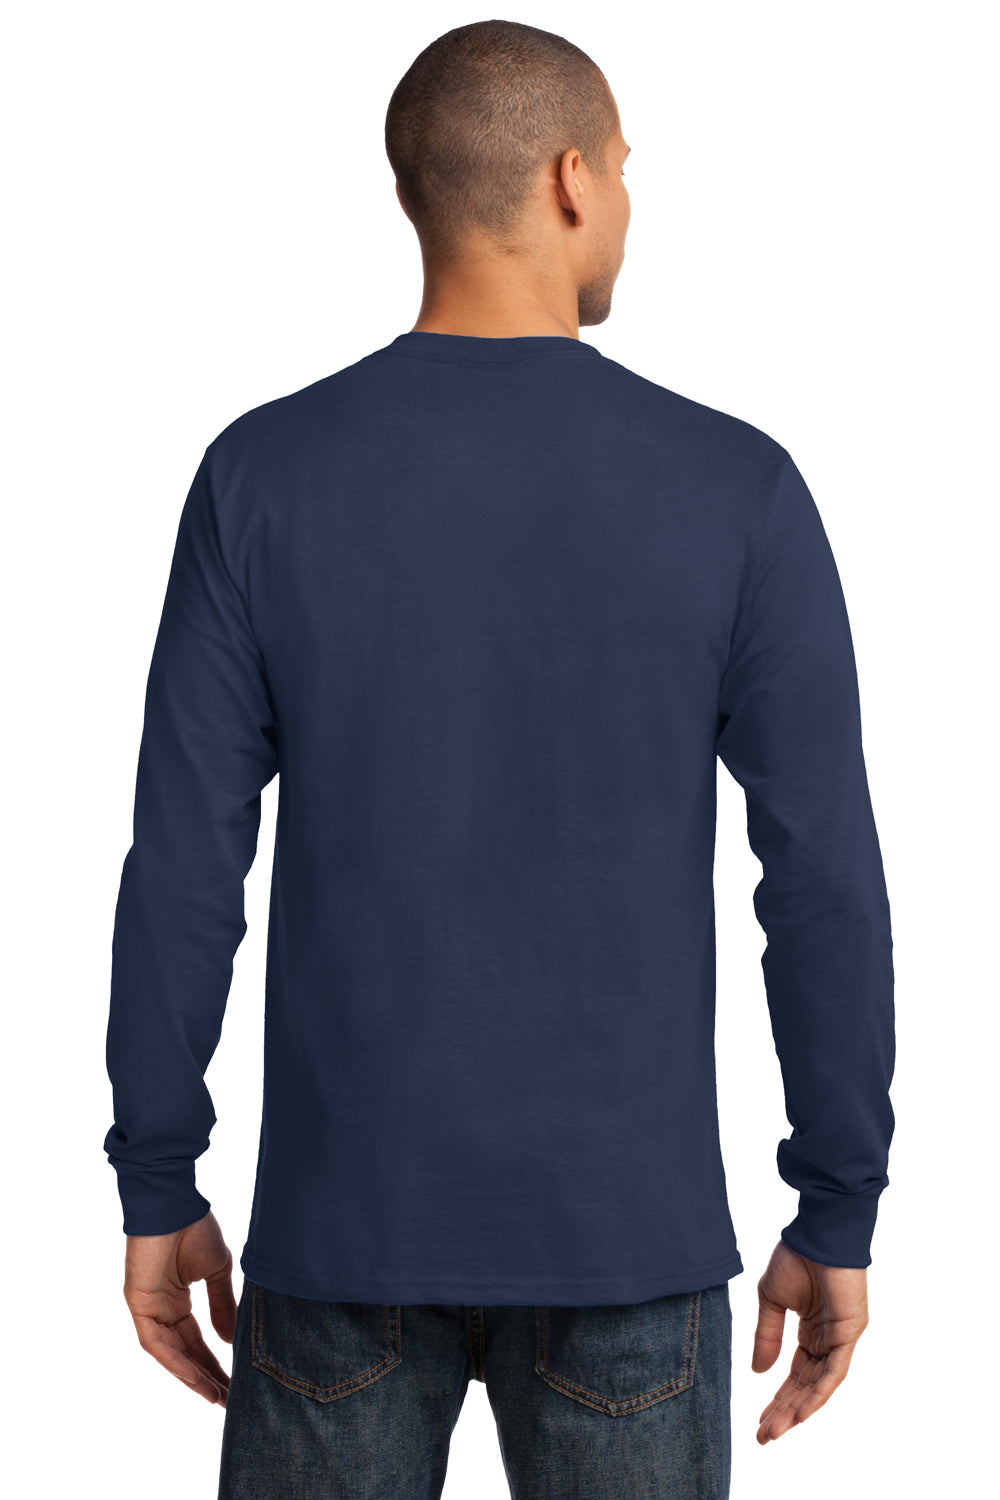 Port & Company PC61LS Mens Essential Long Sleeve Crewneck T-Shirt Navy Blue Back